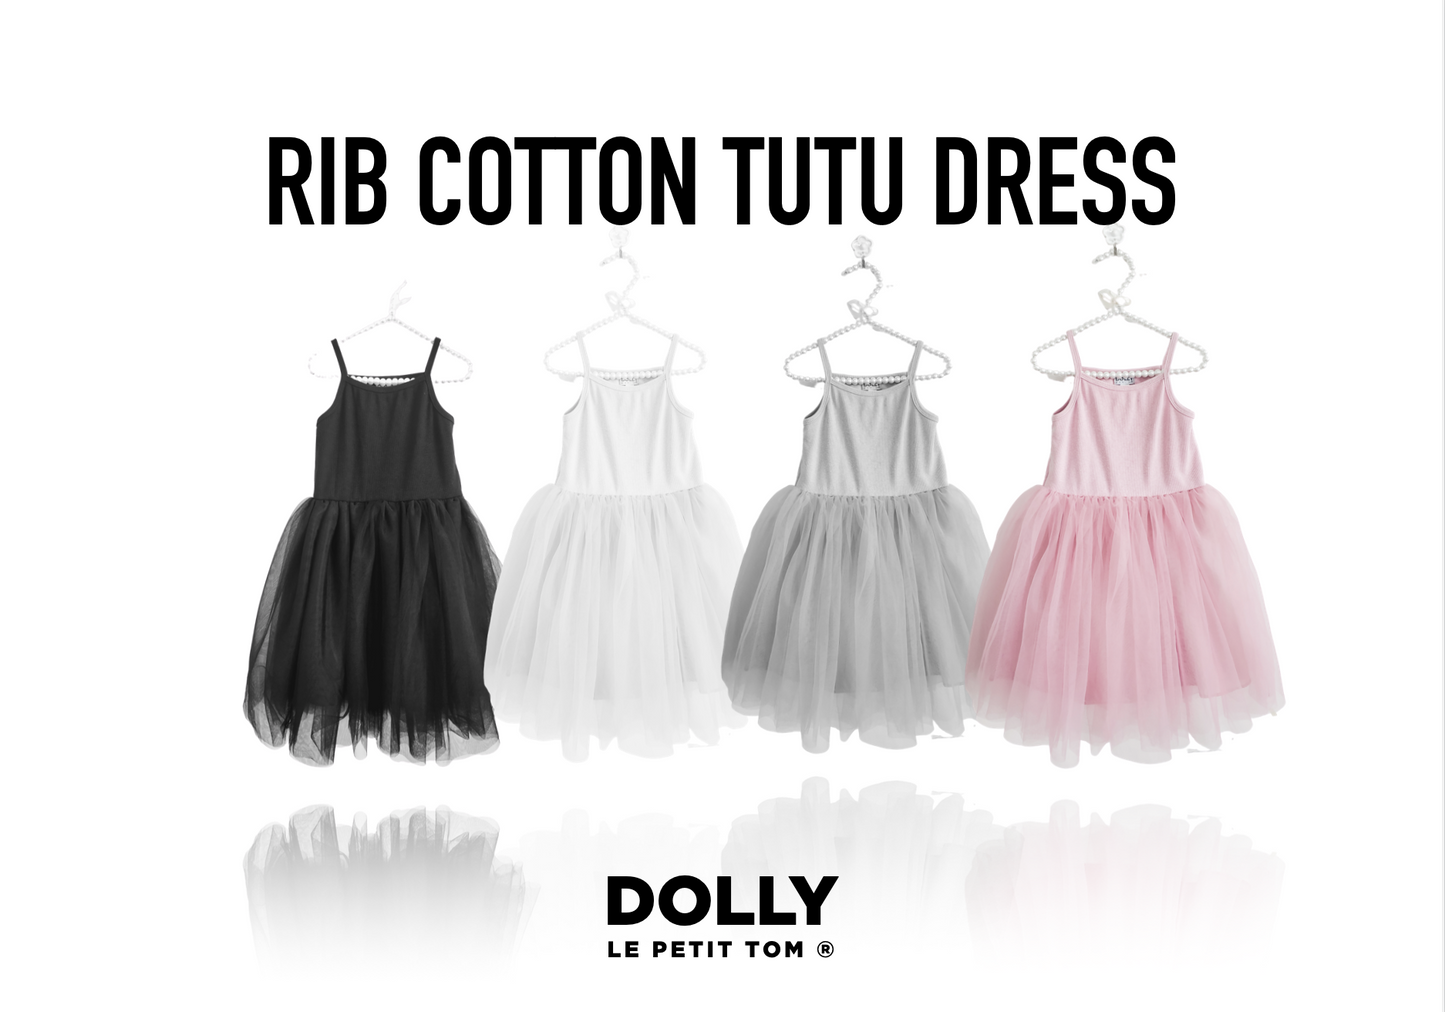 DOLLY by Le Petit Tom ® RIB COTTON TUTU DRESS white